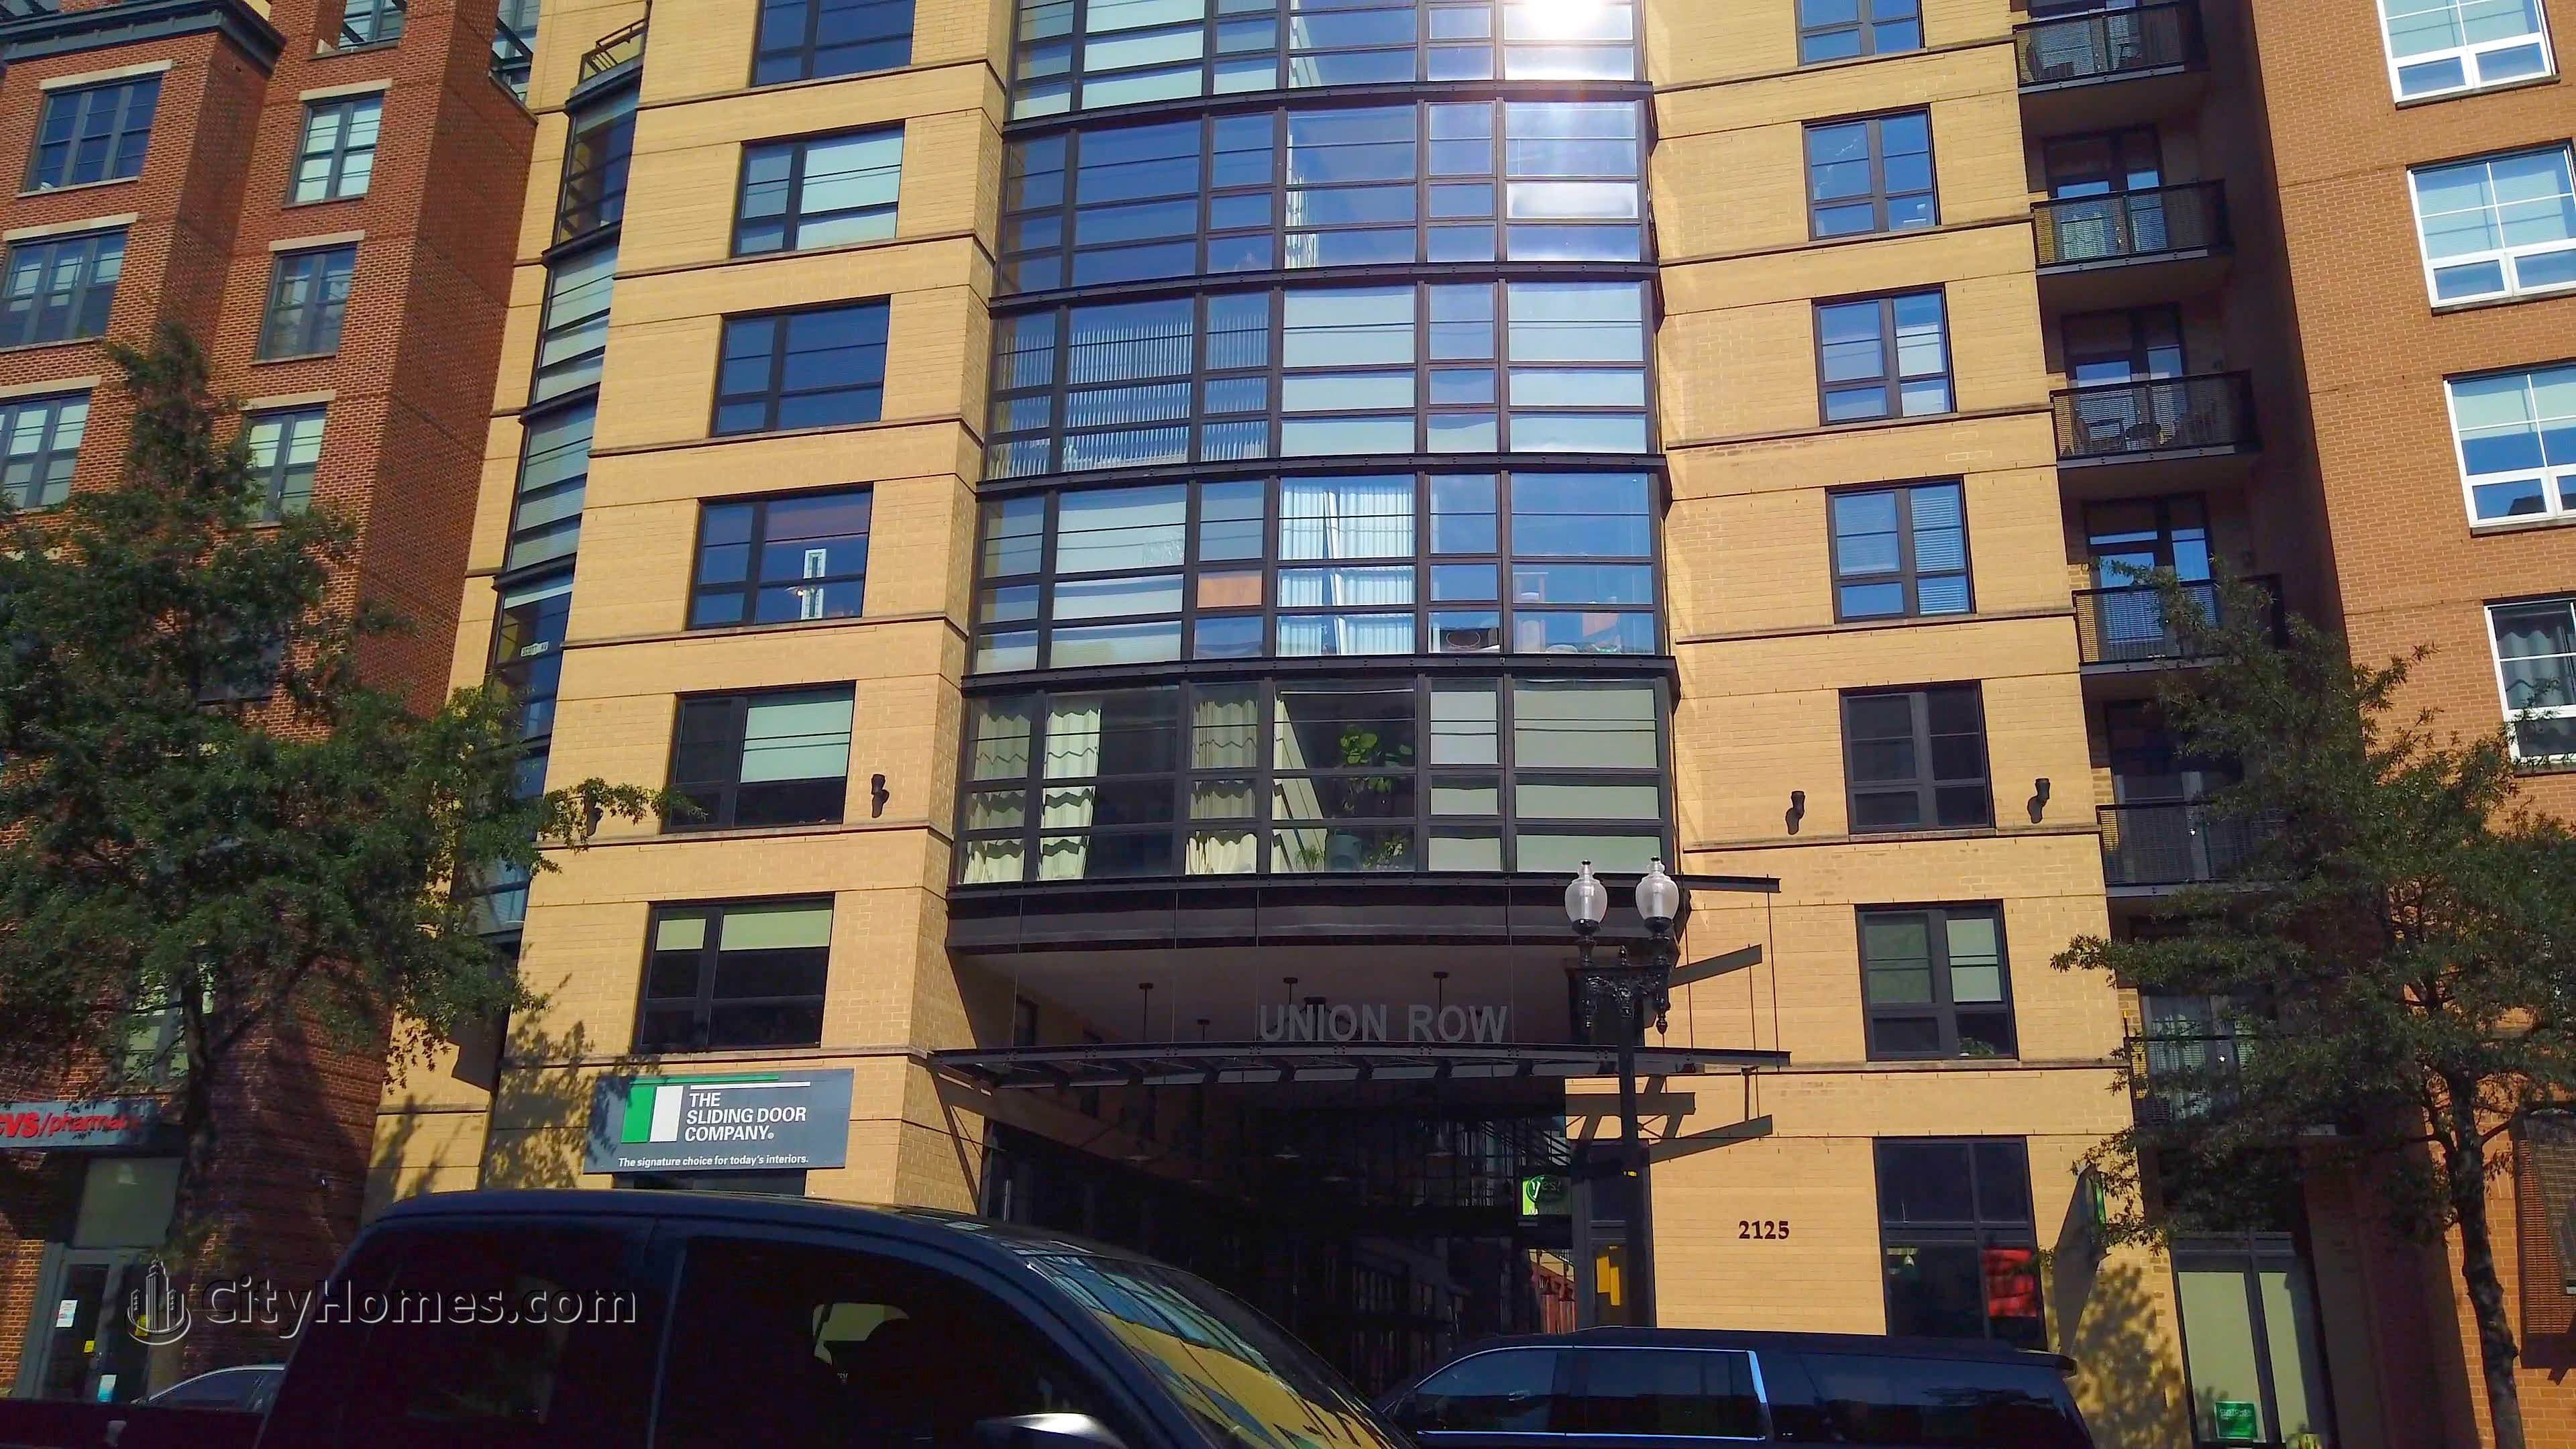 3. Flats at Union Row bâtiment à 2125 14th St NW, U Street Corridor, Washington, DC 20009